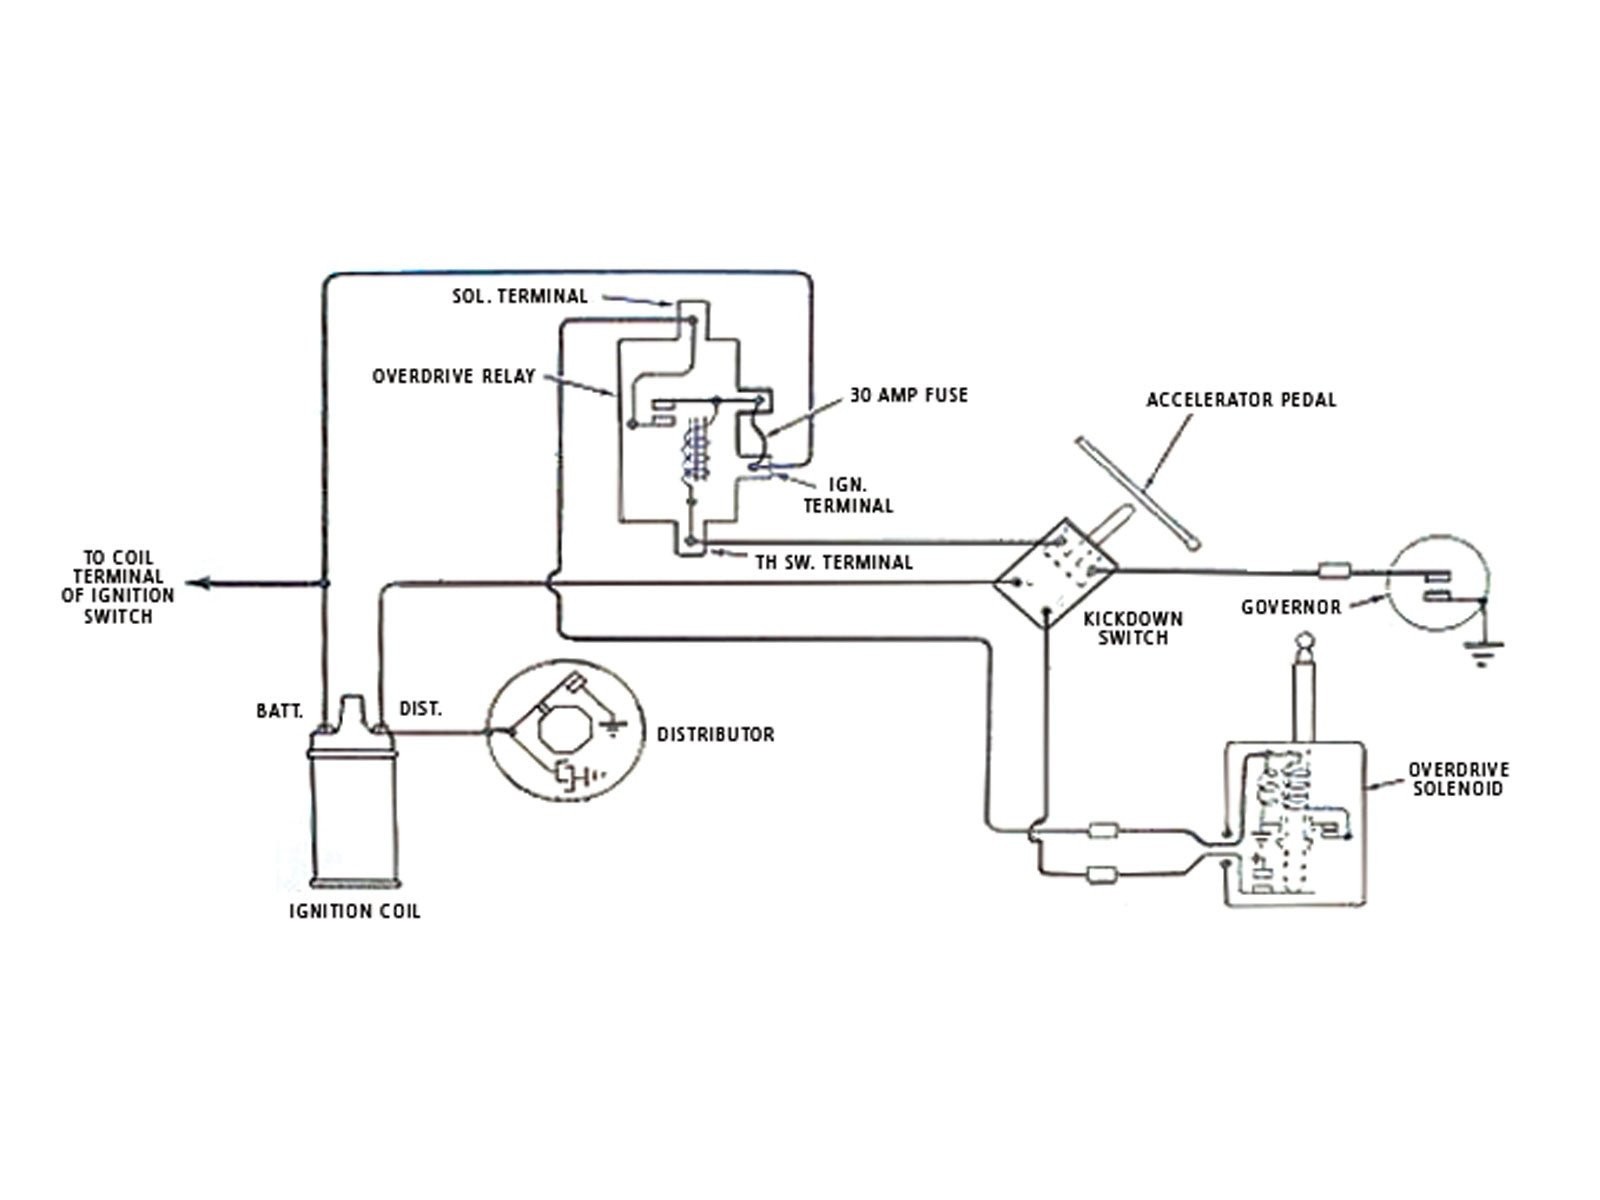 Borg Warner Overdrive Wiring Diagram Simple Wiring Diagrams In Addition Borg Warner Overdrive Transmission